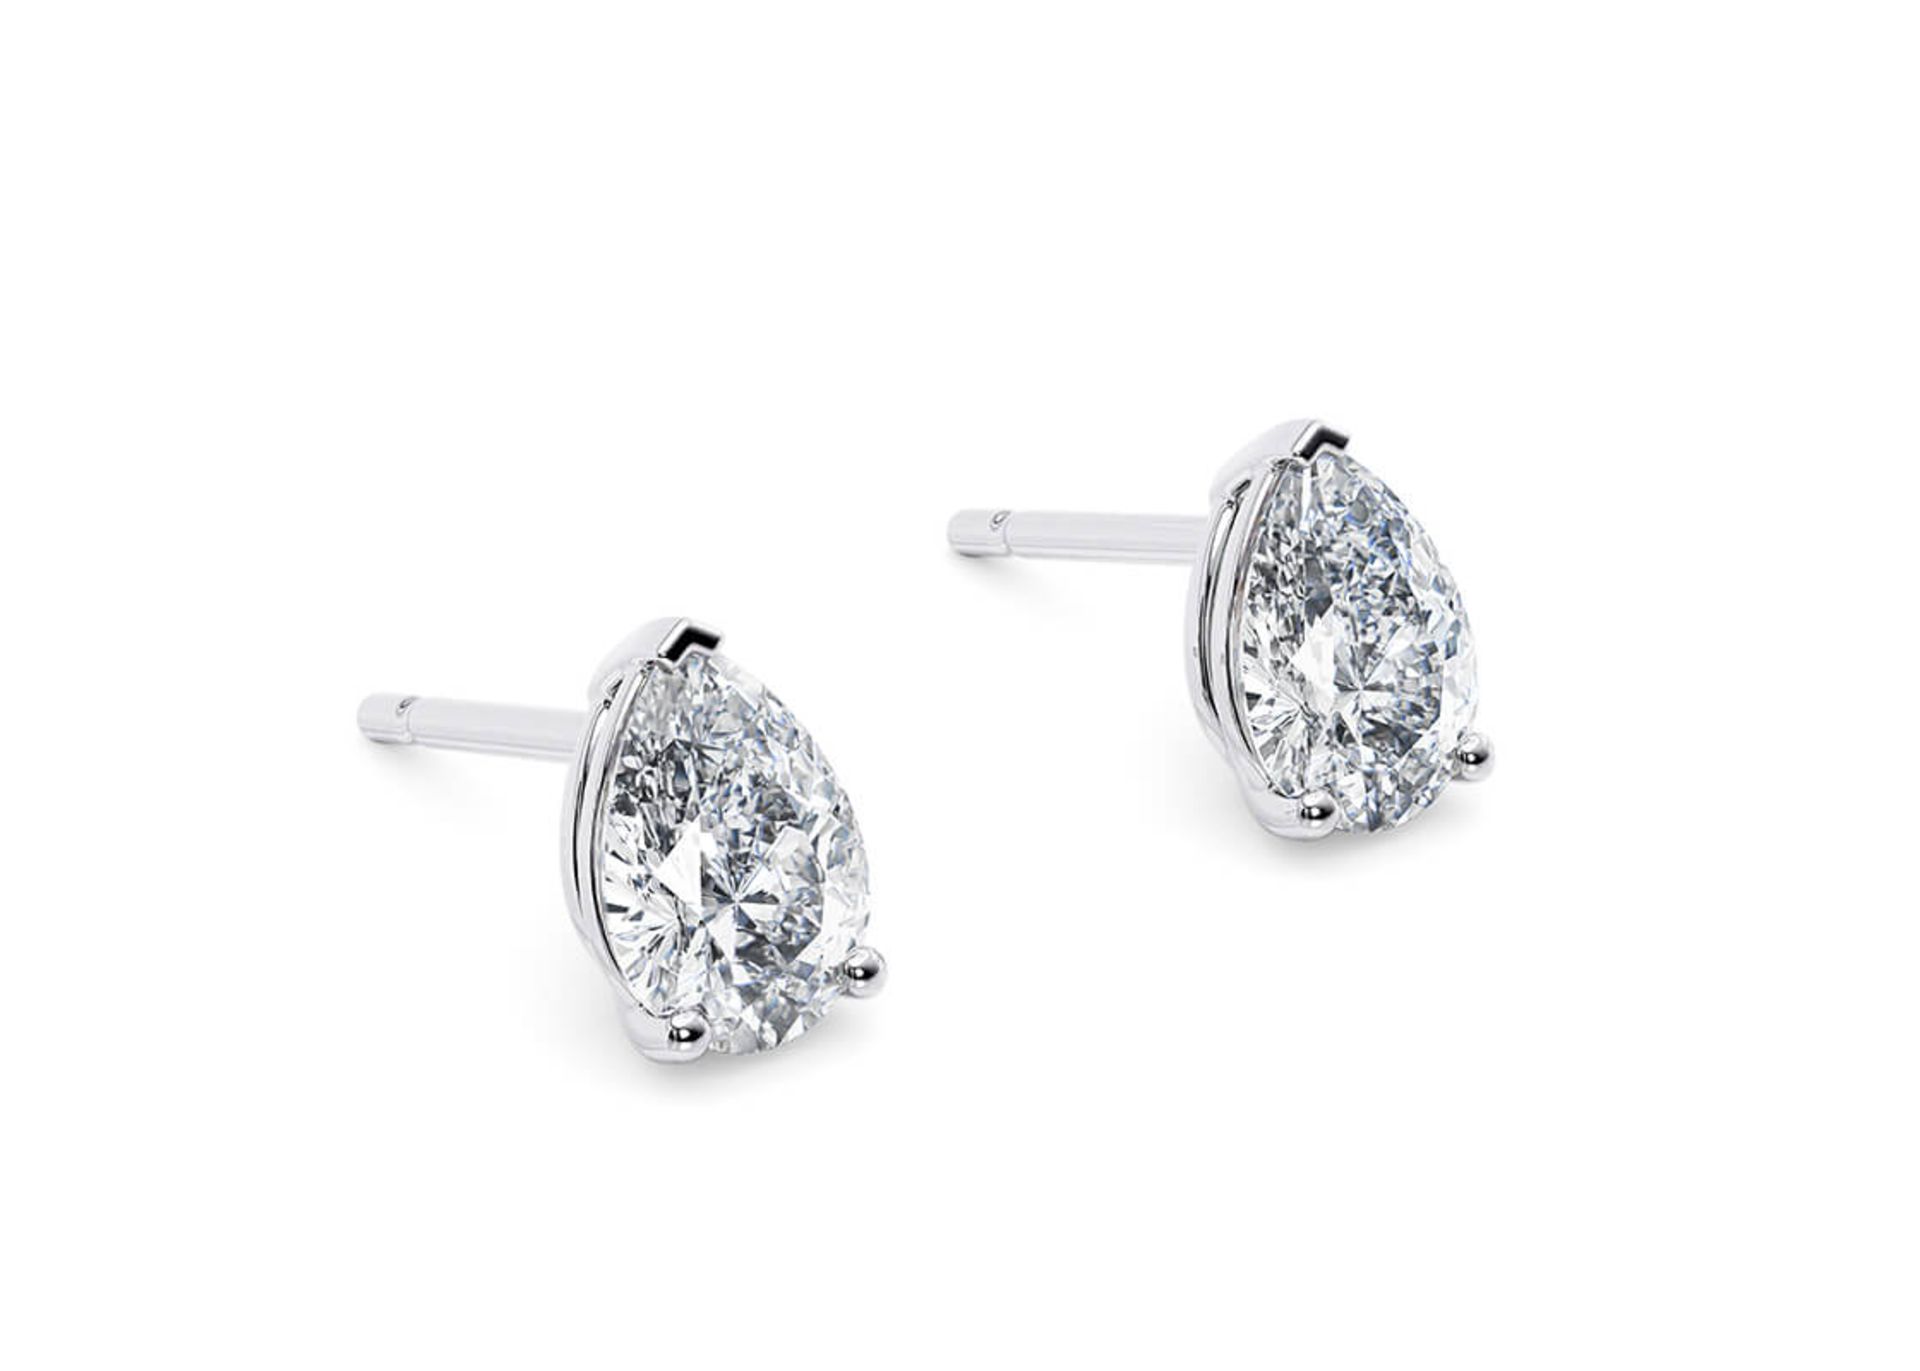 Pear Cut Cut 4.00 Carat Diamond 18kt White Gold Earrings- D Colour VS Clarity IGI - Image 2 of 3